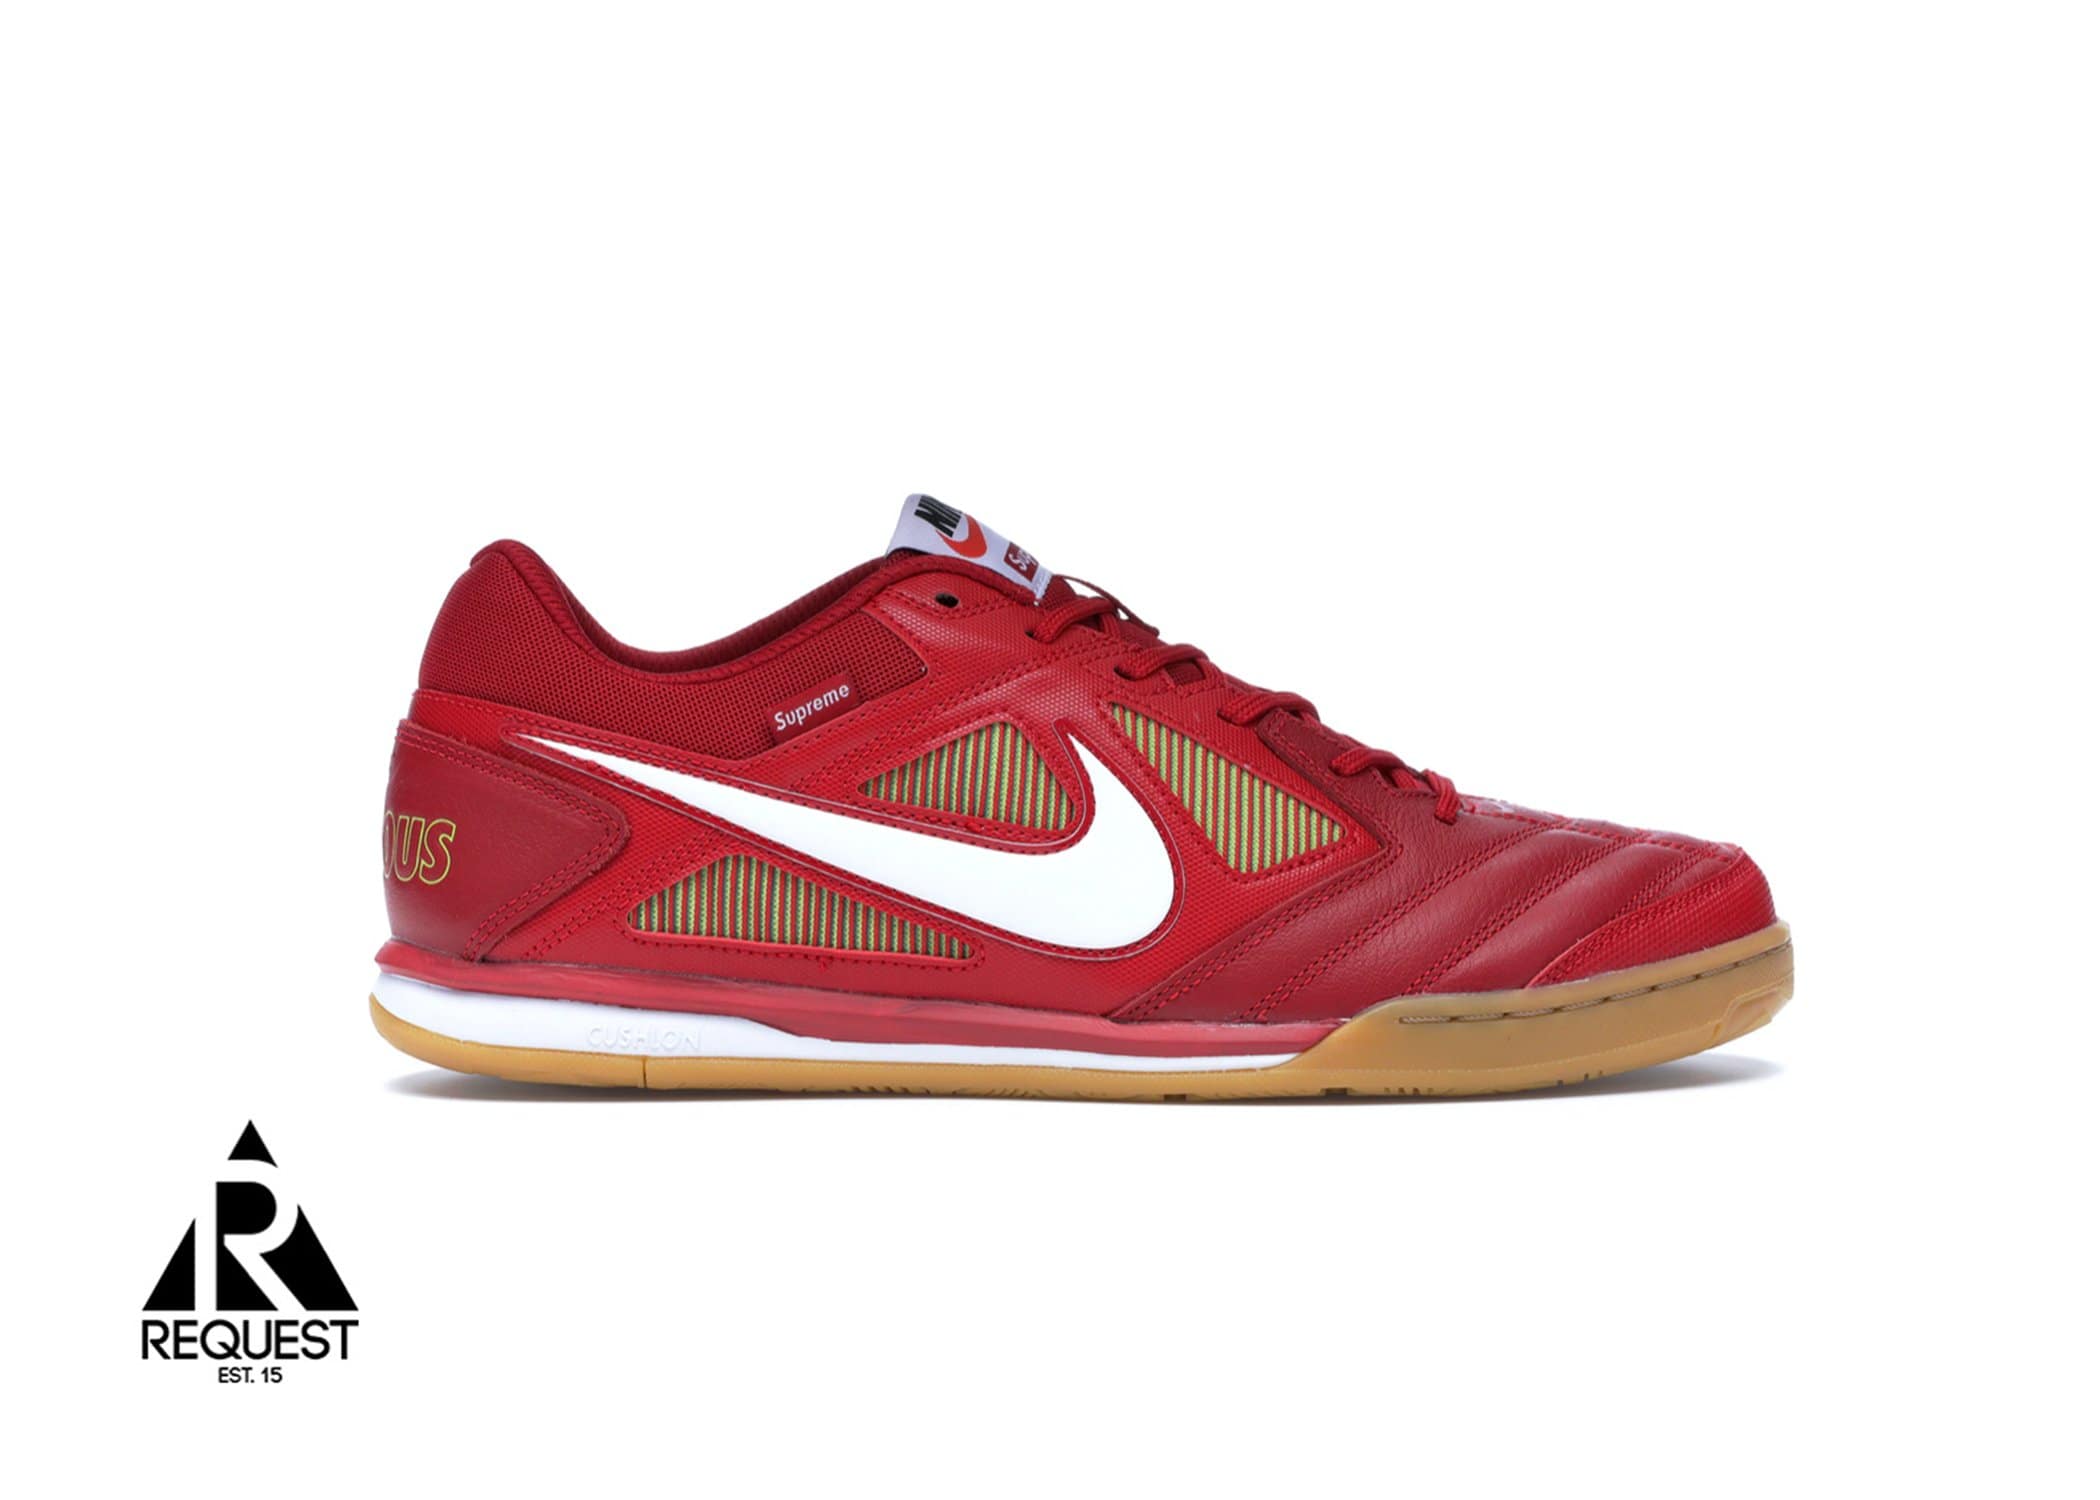 Nike SB Gato Supreme “Red”